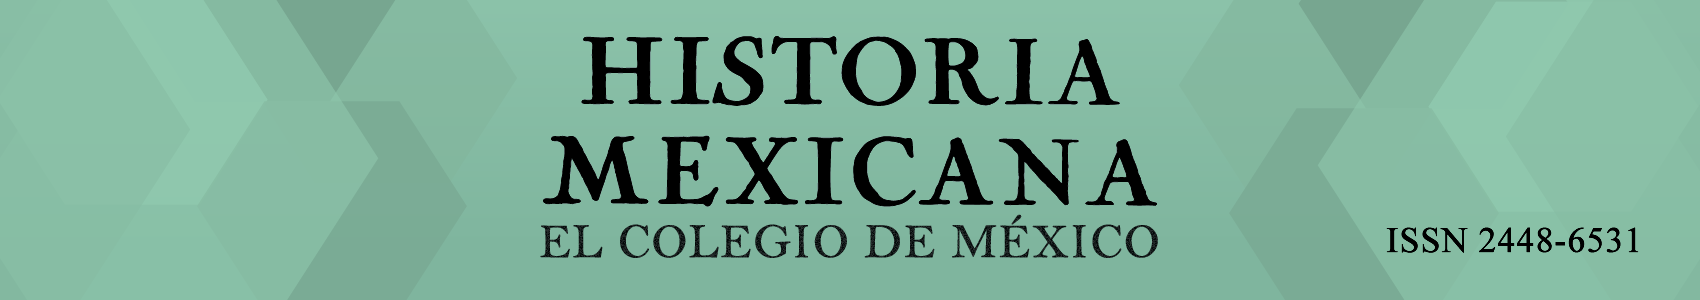 Banner Historia Mexicana